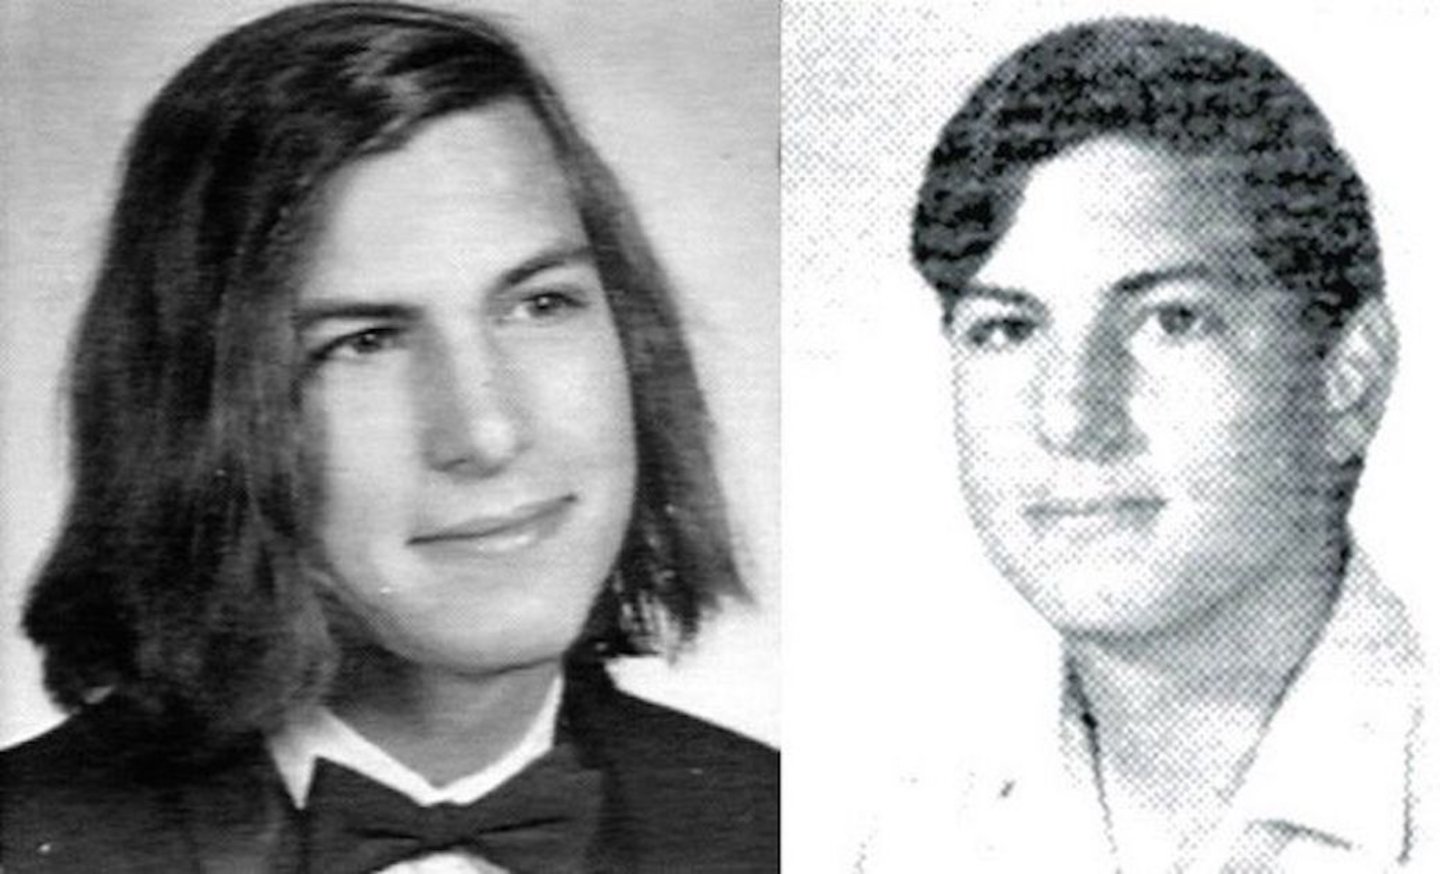 Dos fotos de Steve Jobs cuando era joven